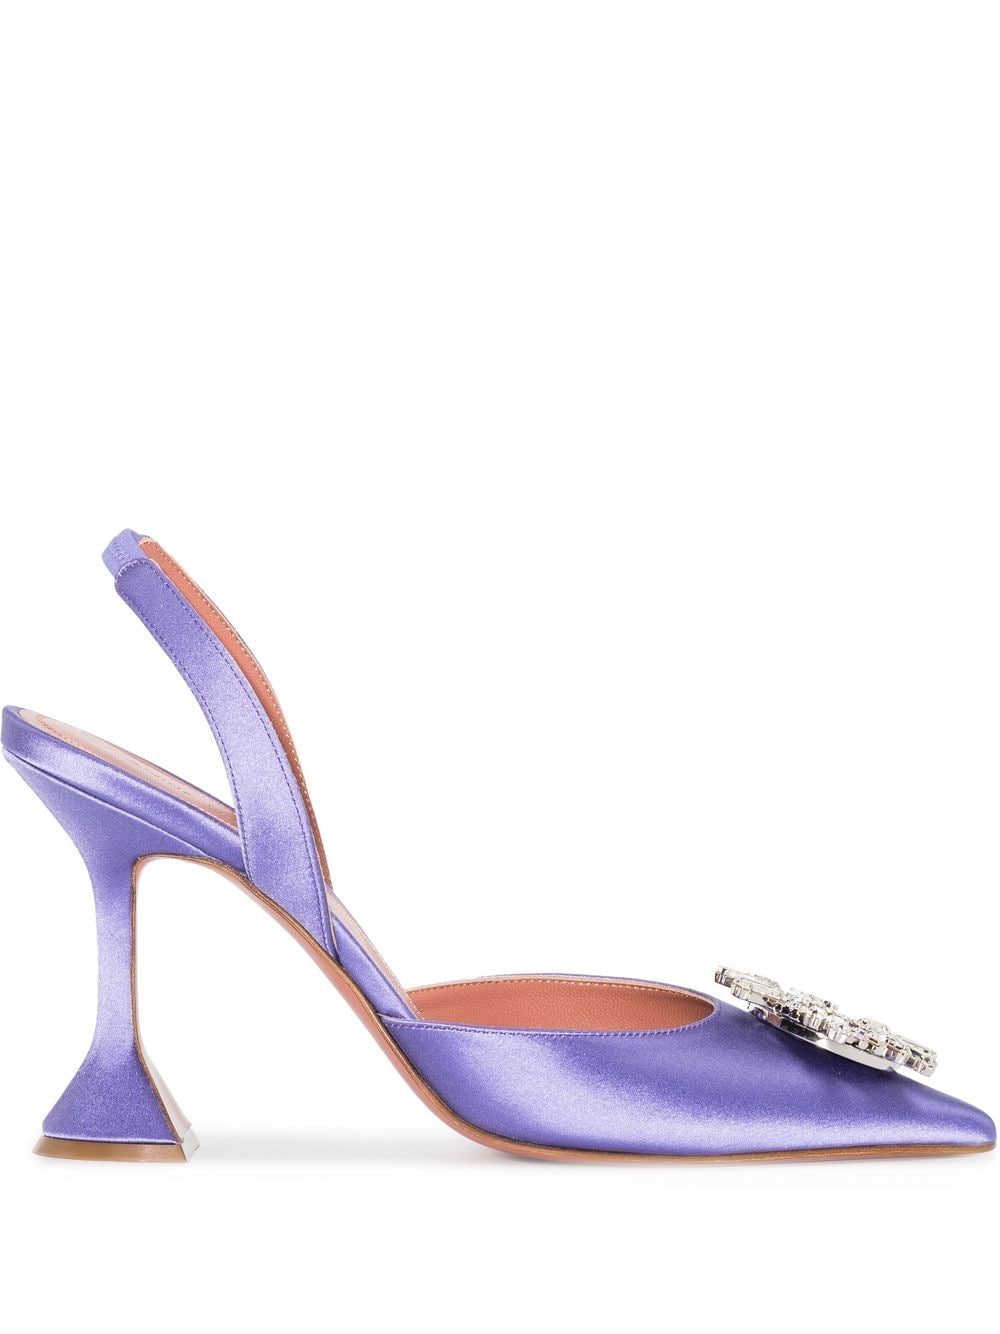 Amina Muaddi Crystal-embellished Pointed-toe Pumps In Purple | ModeSens